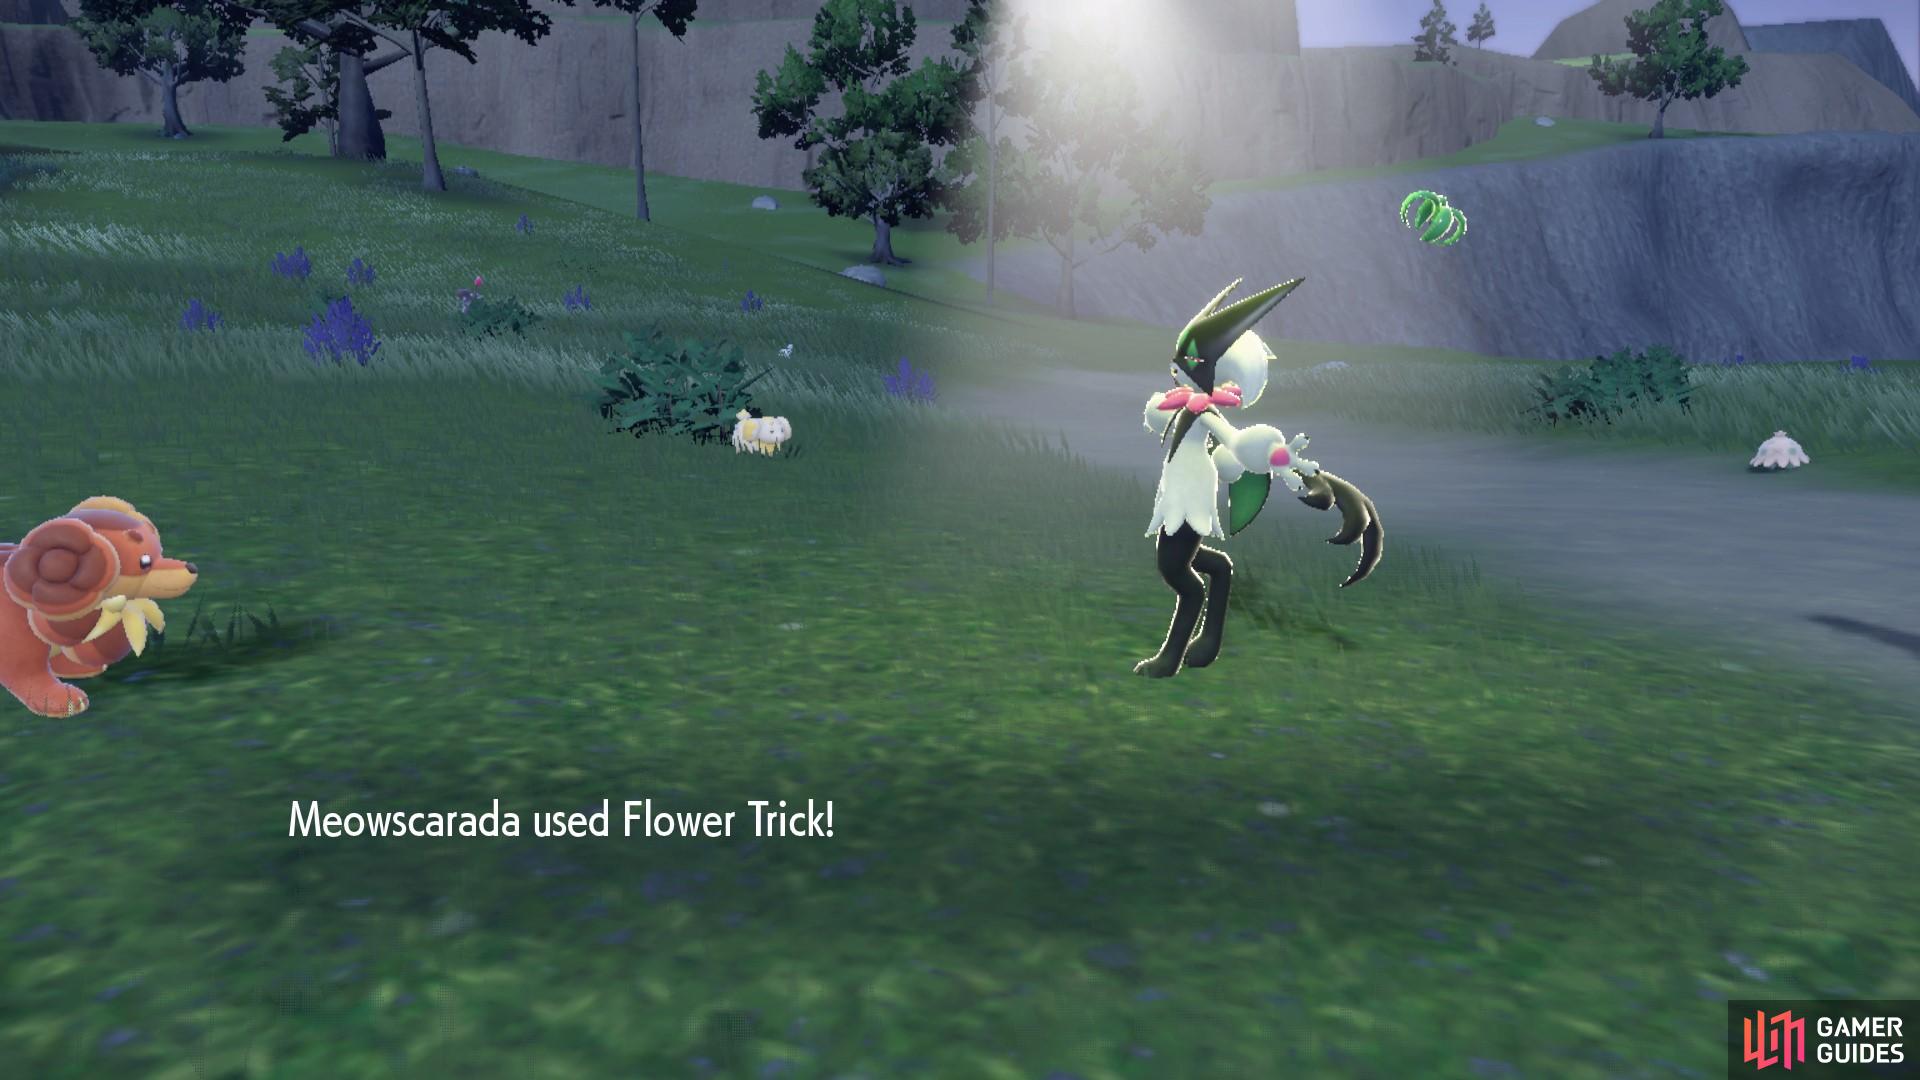 Meowscarada using Flower Trick.